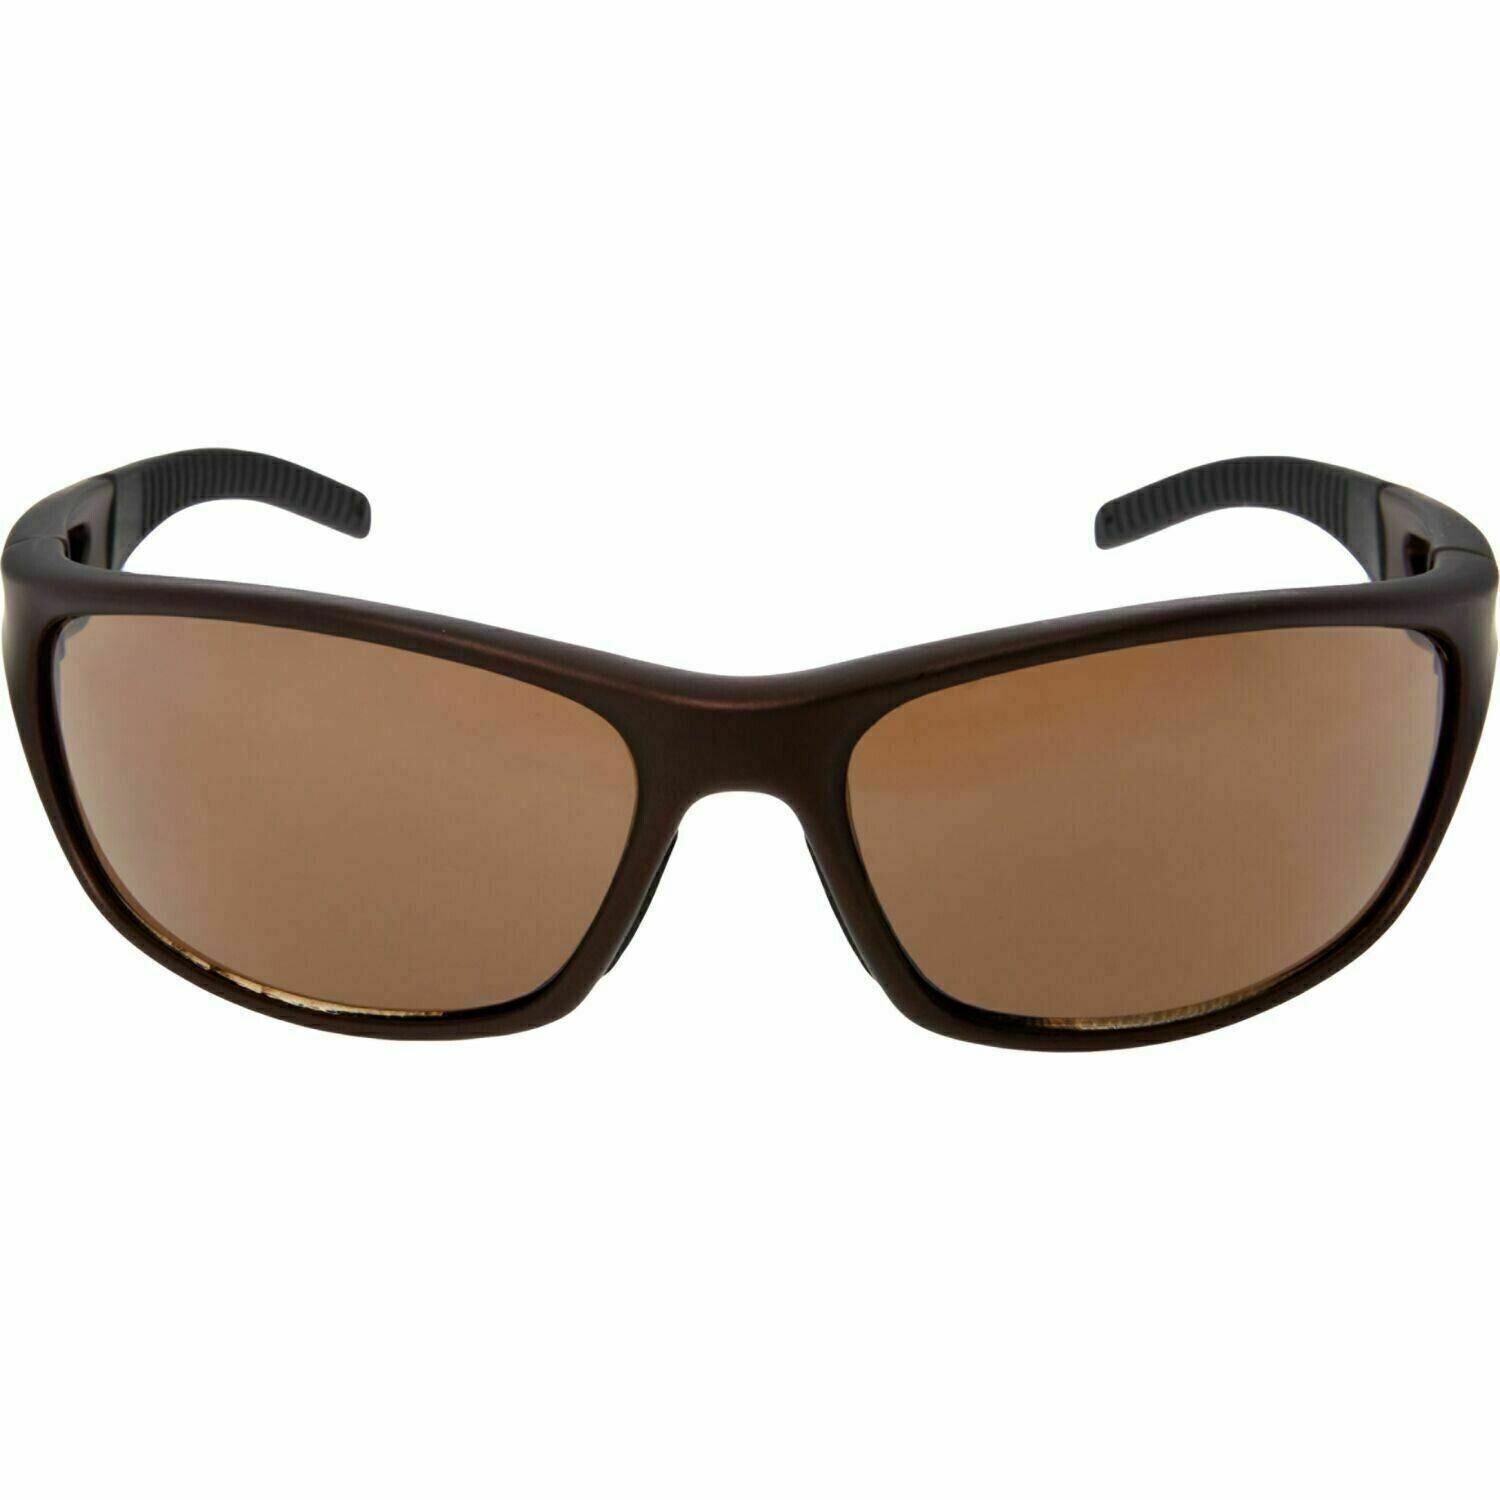 TIMBERLAND Men's Matte Copper Brown Sport Style Wrap Sunglasses, TB7124